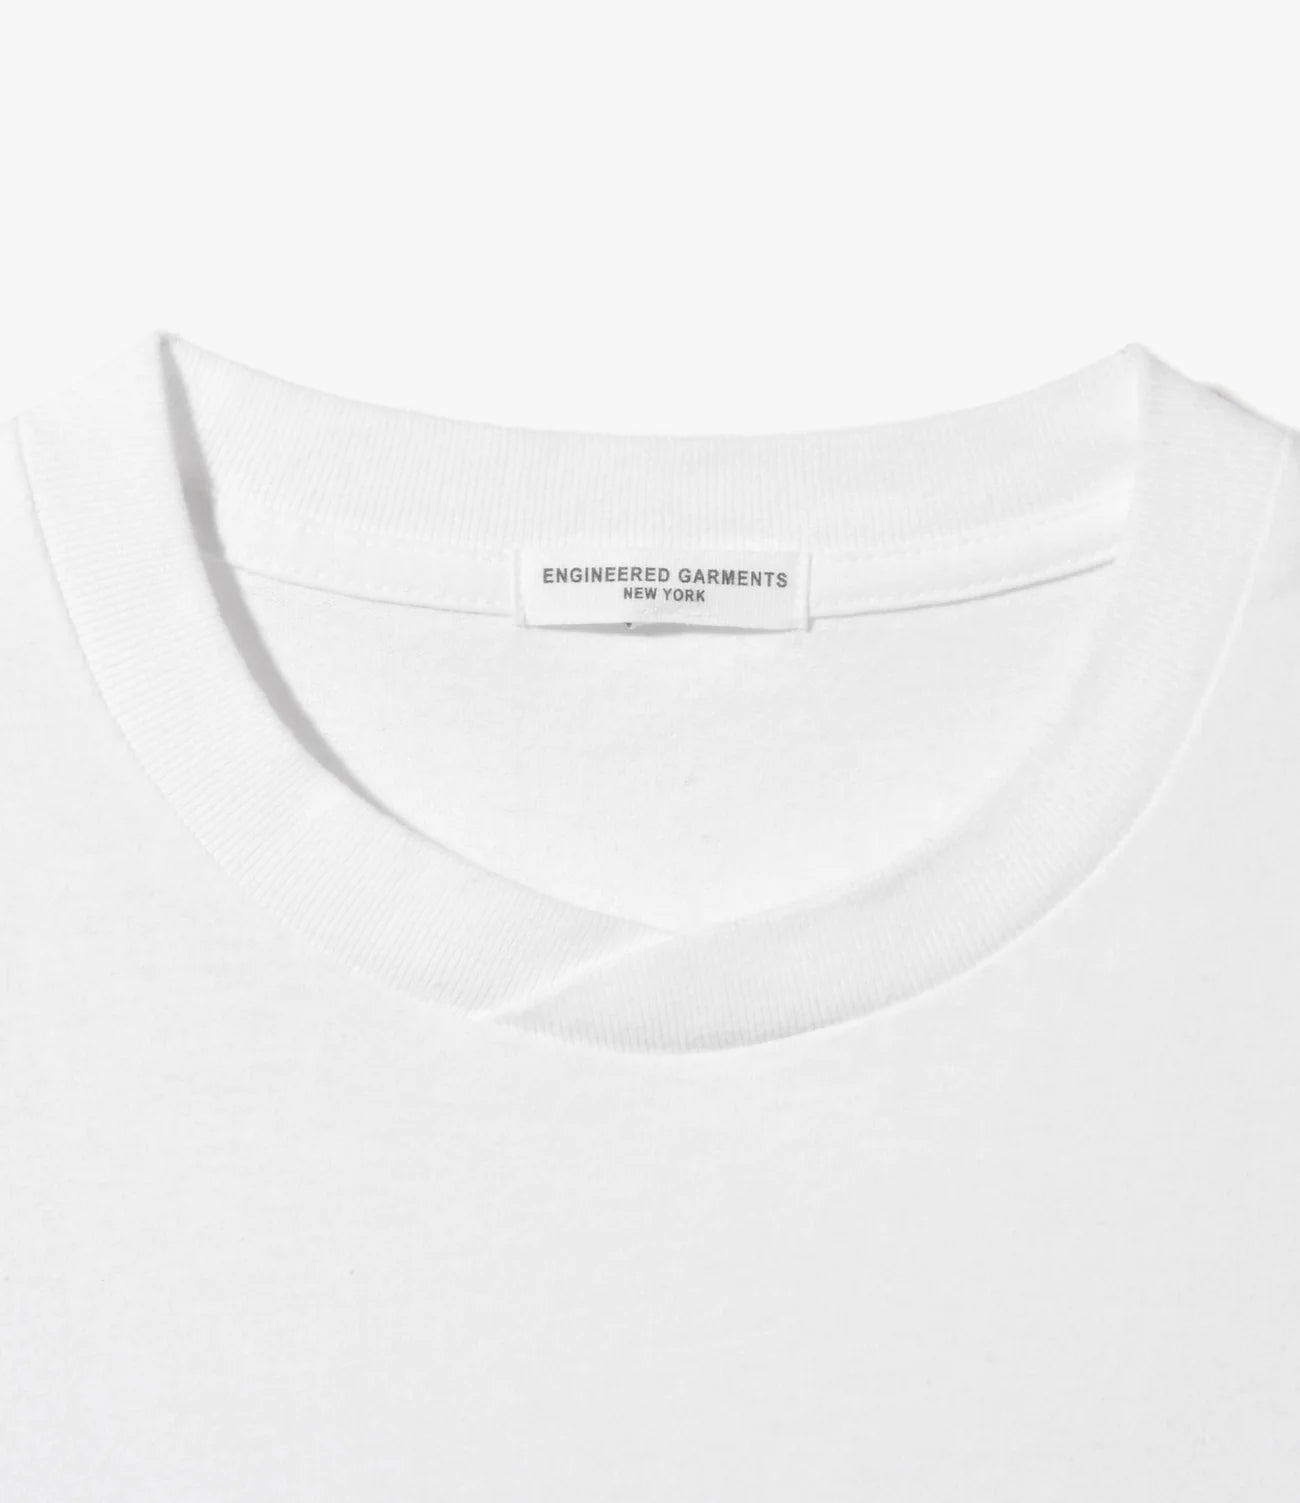 Printed Cross Crew Neck Pocket T-shirt - White - Absurdist